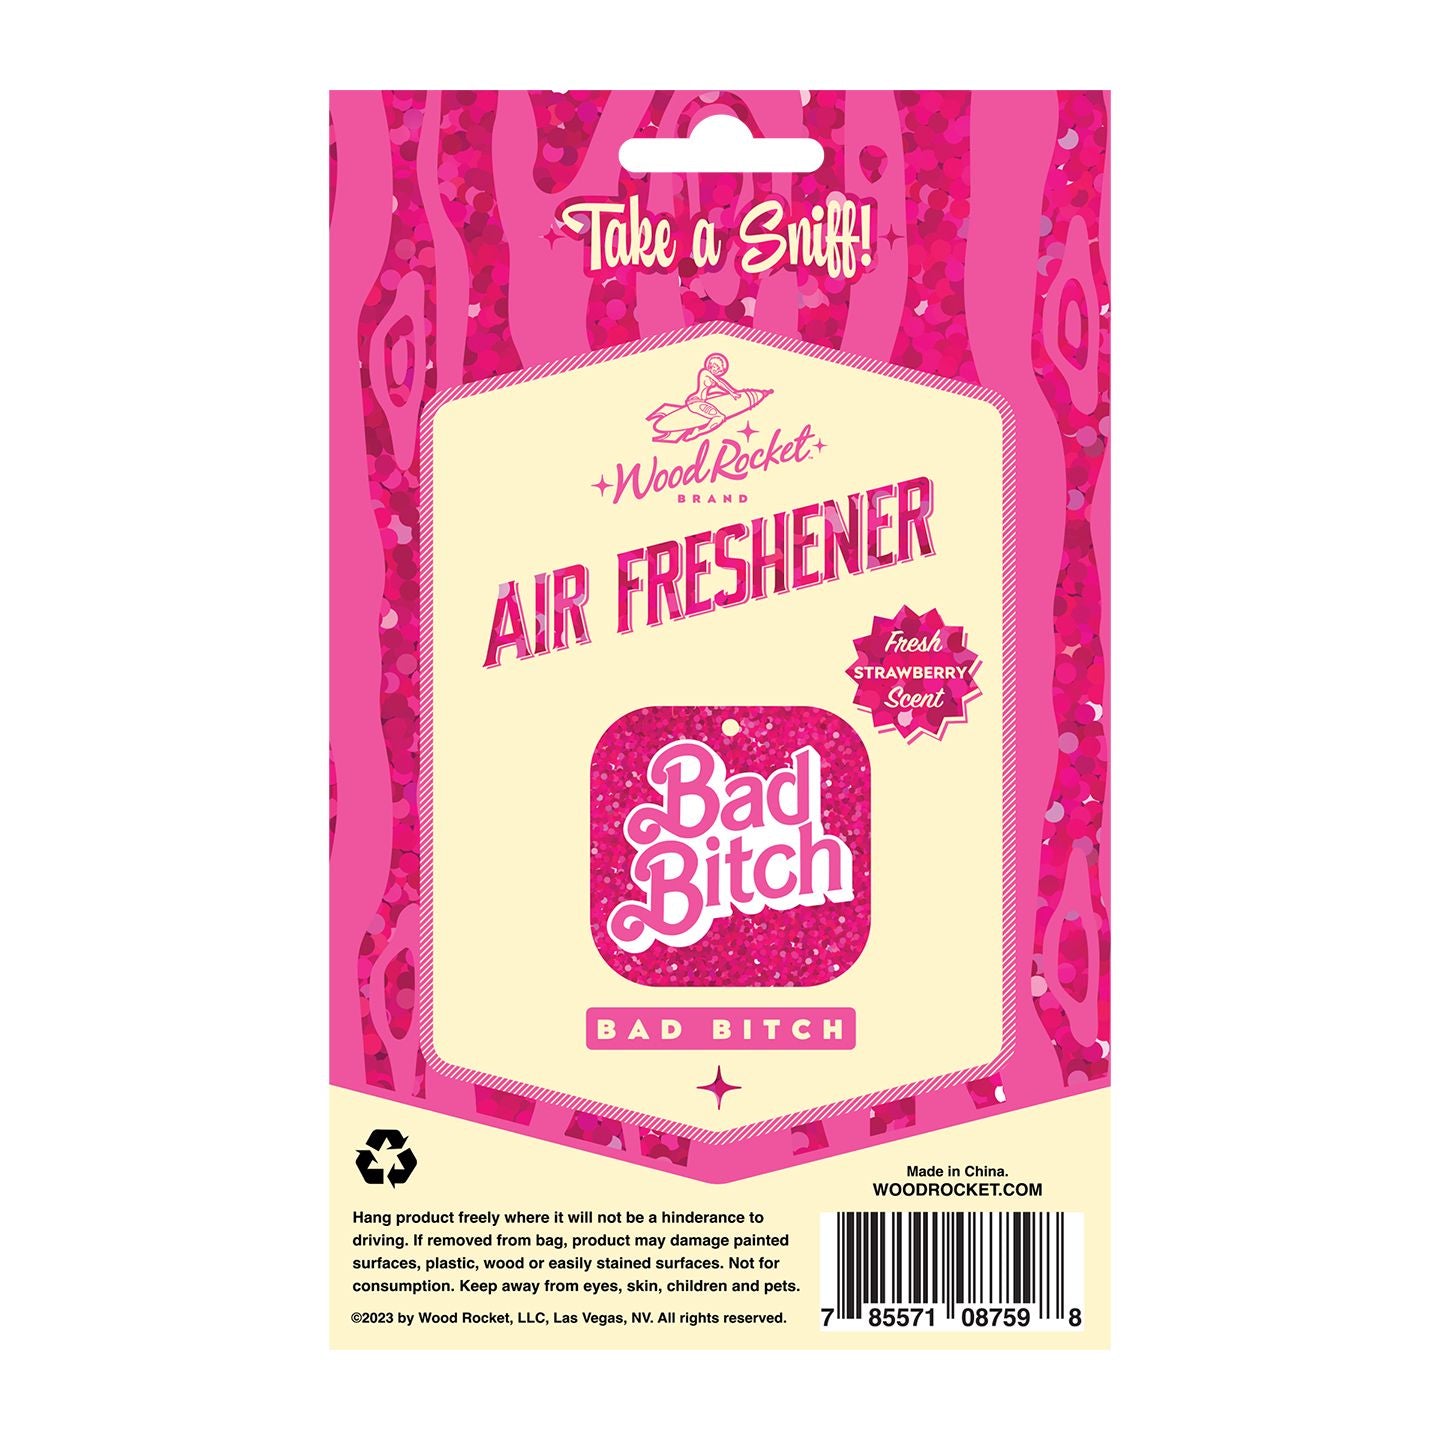 Bad Bitch Air Freshner